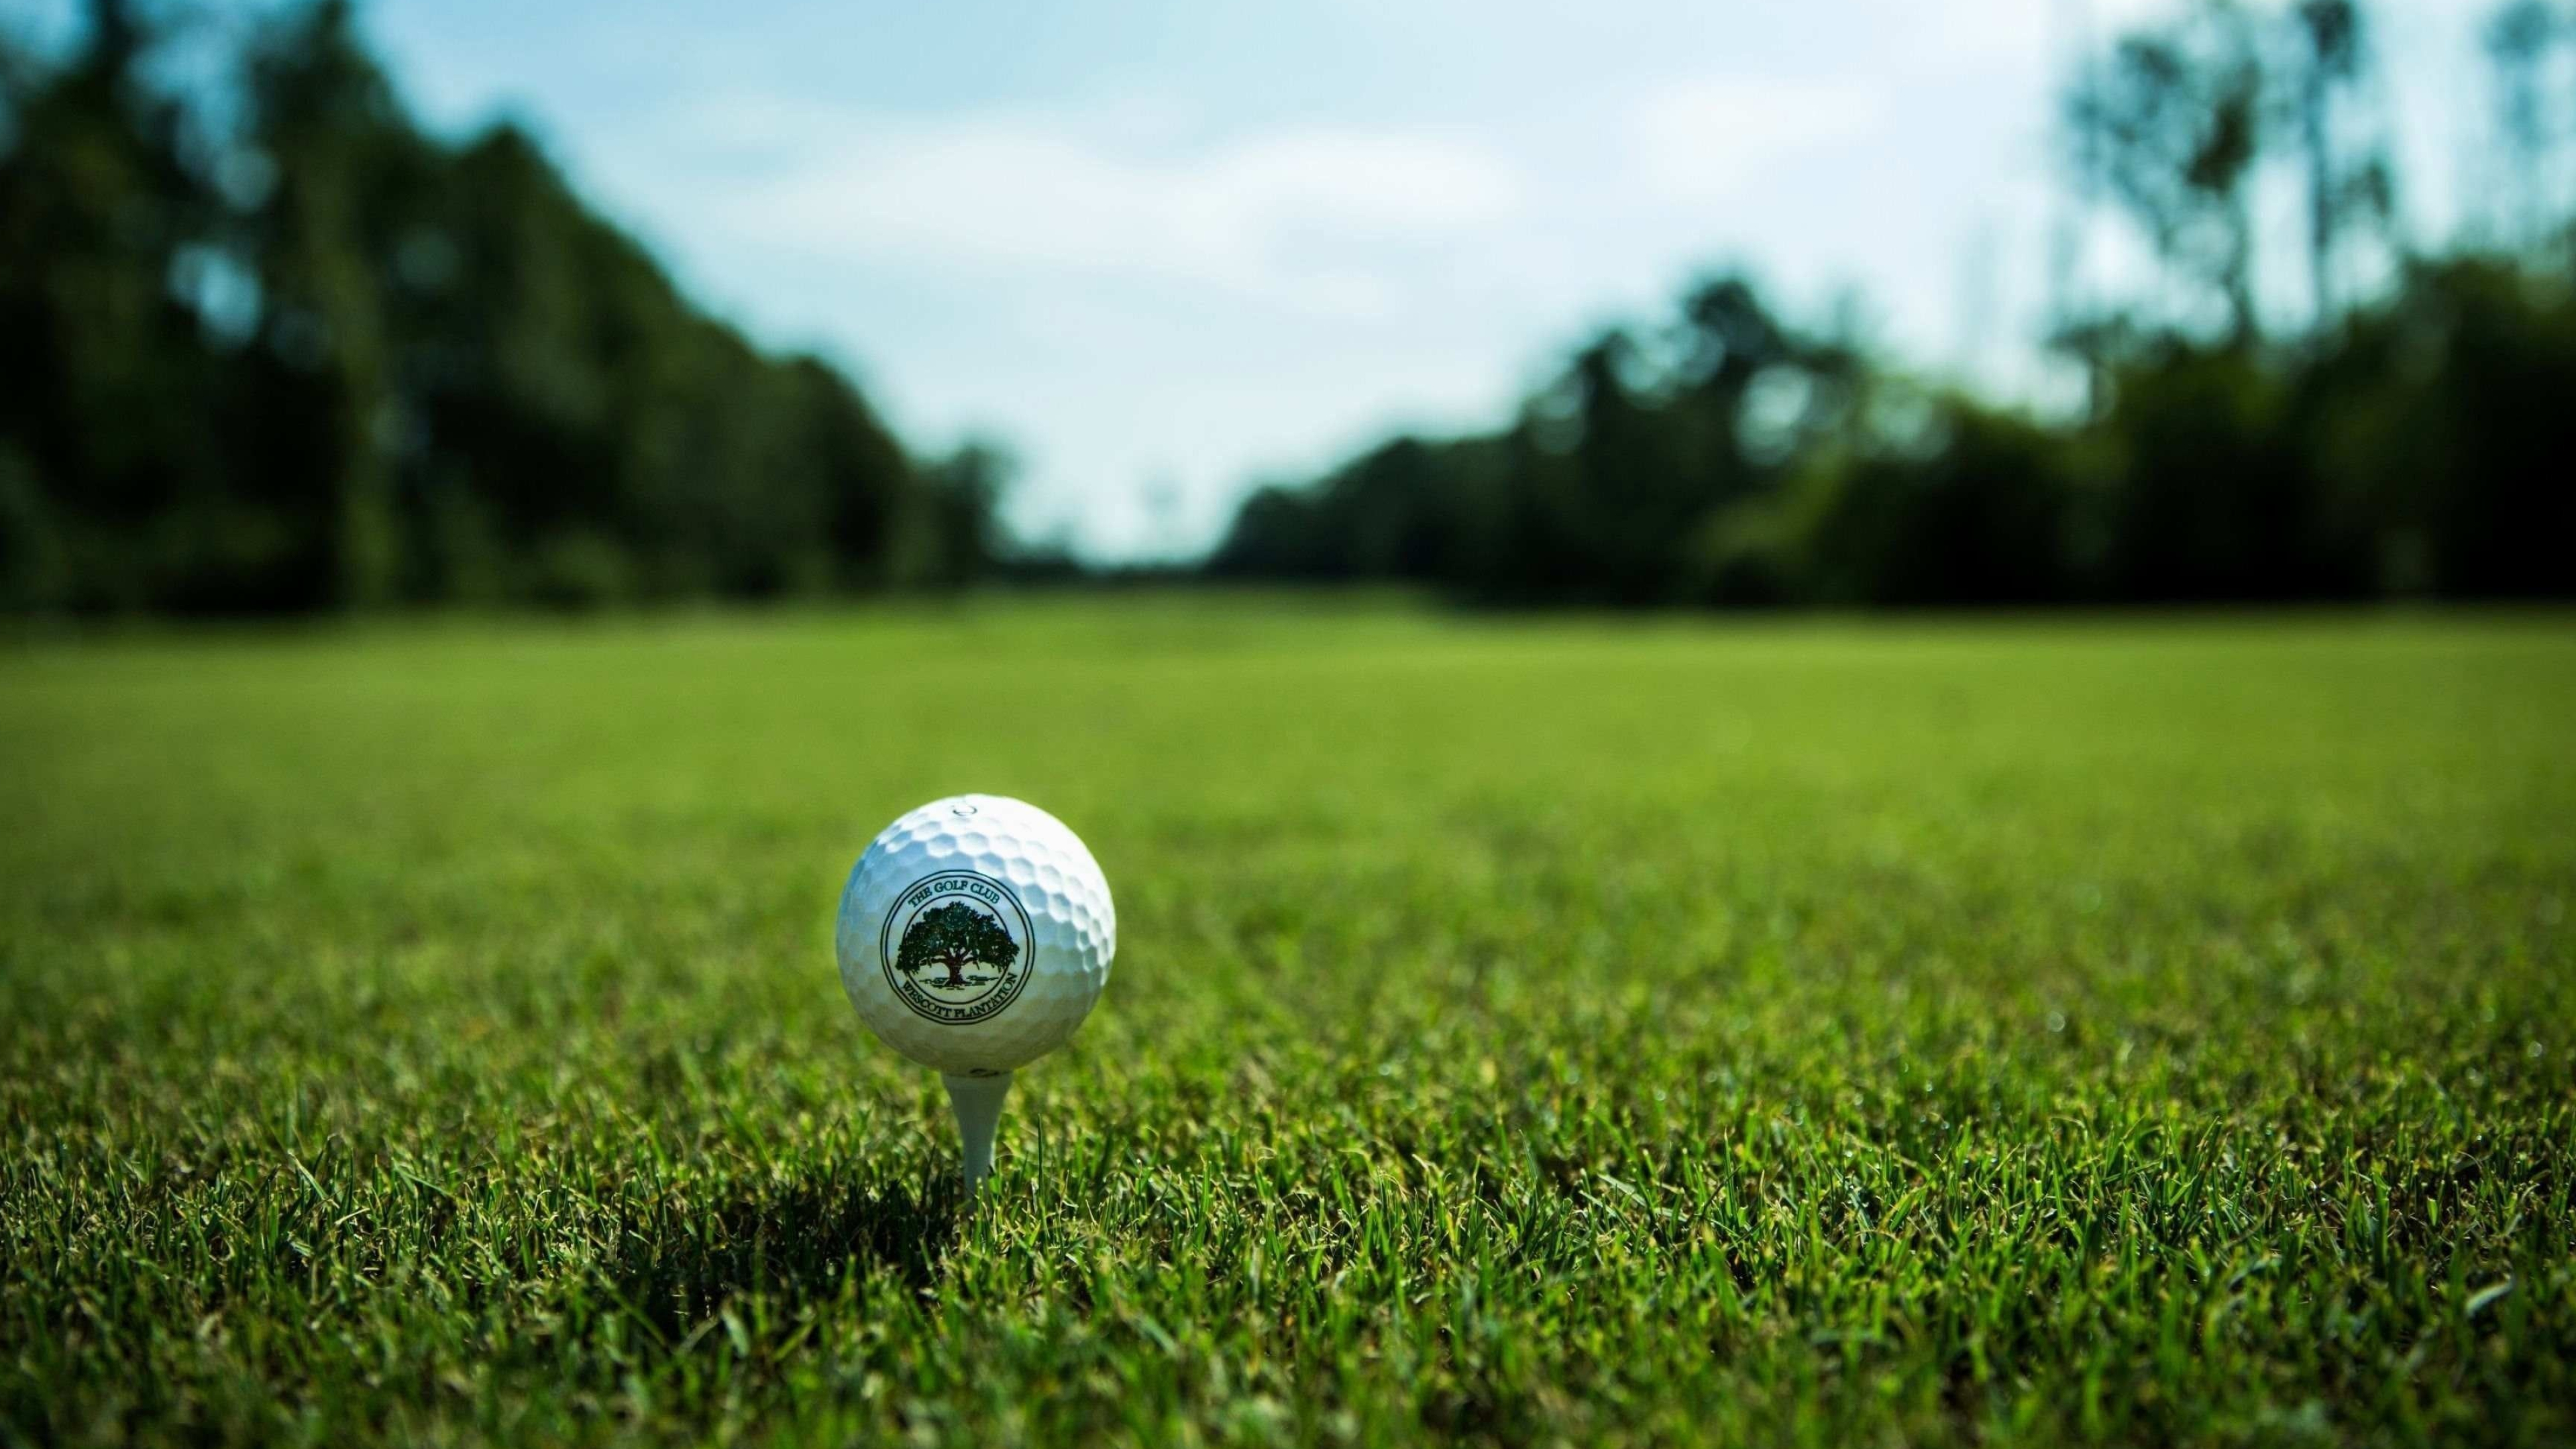 Golf Course: Wescott Plantation, Small ball, Ace, A hole in one, Grass, Fairway, Green. 3840x2160 4K Wallpaper.